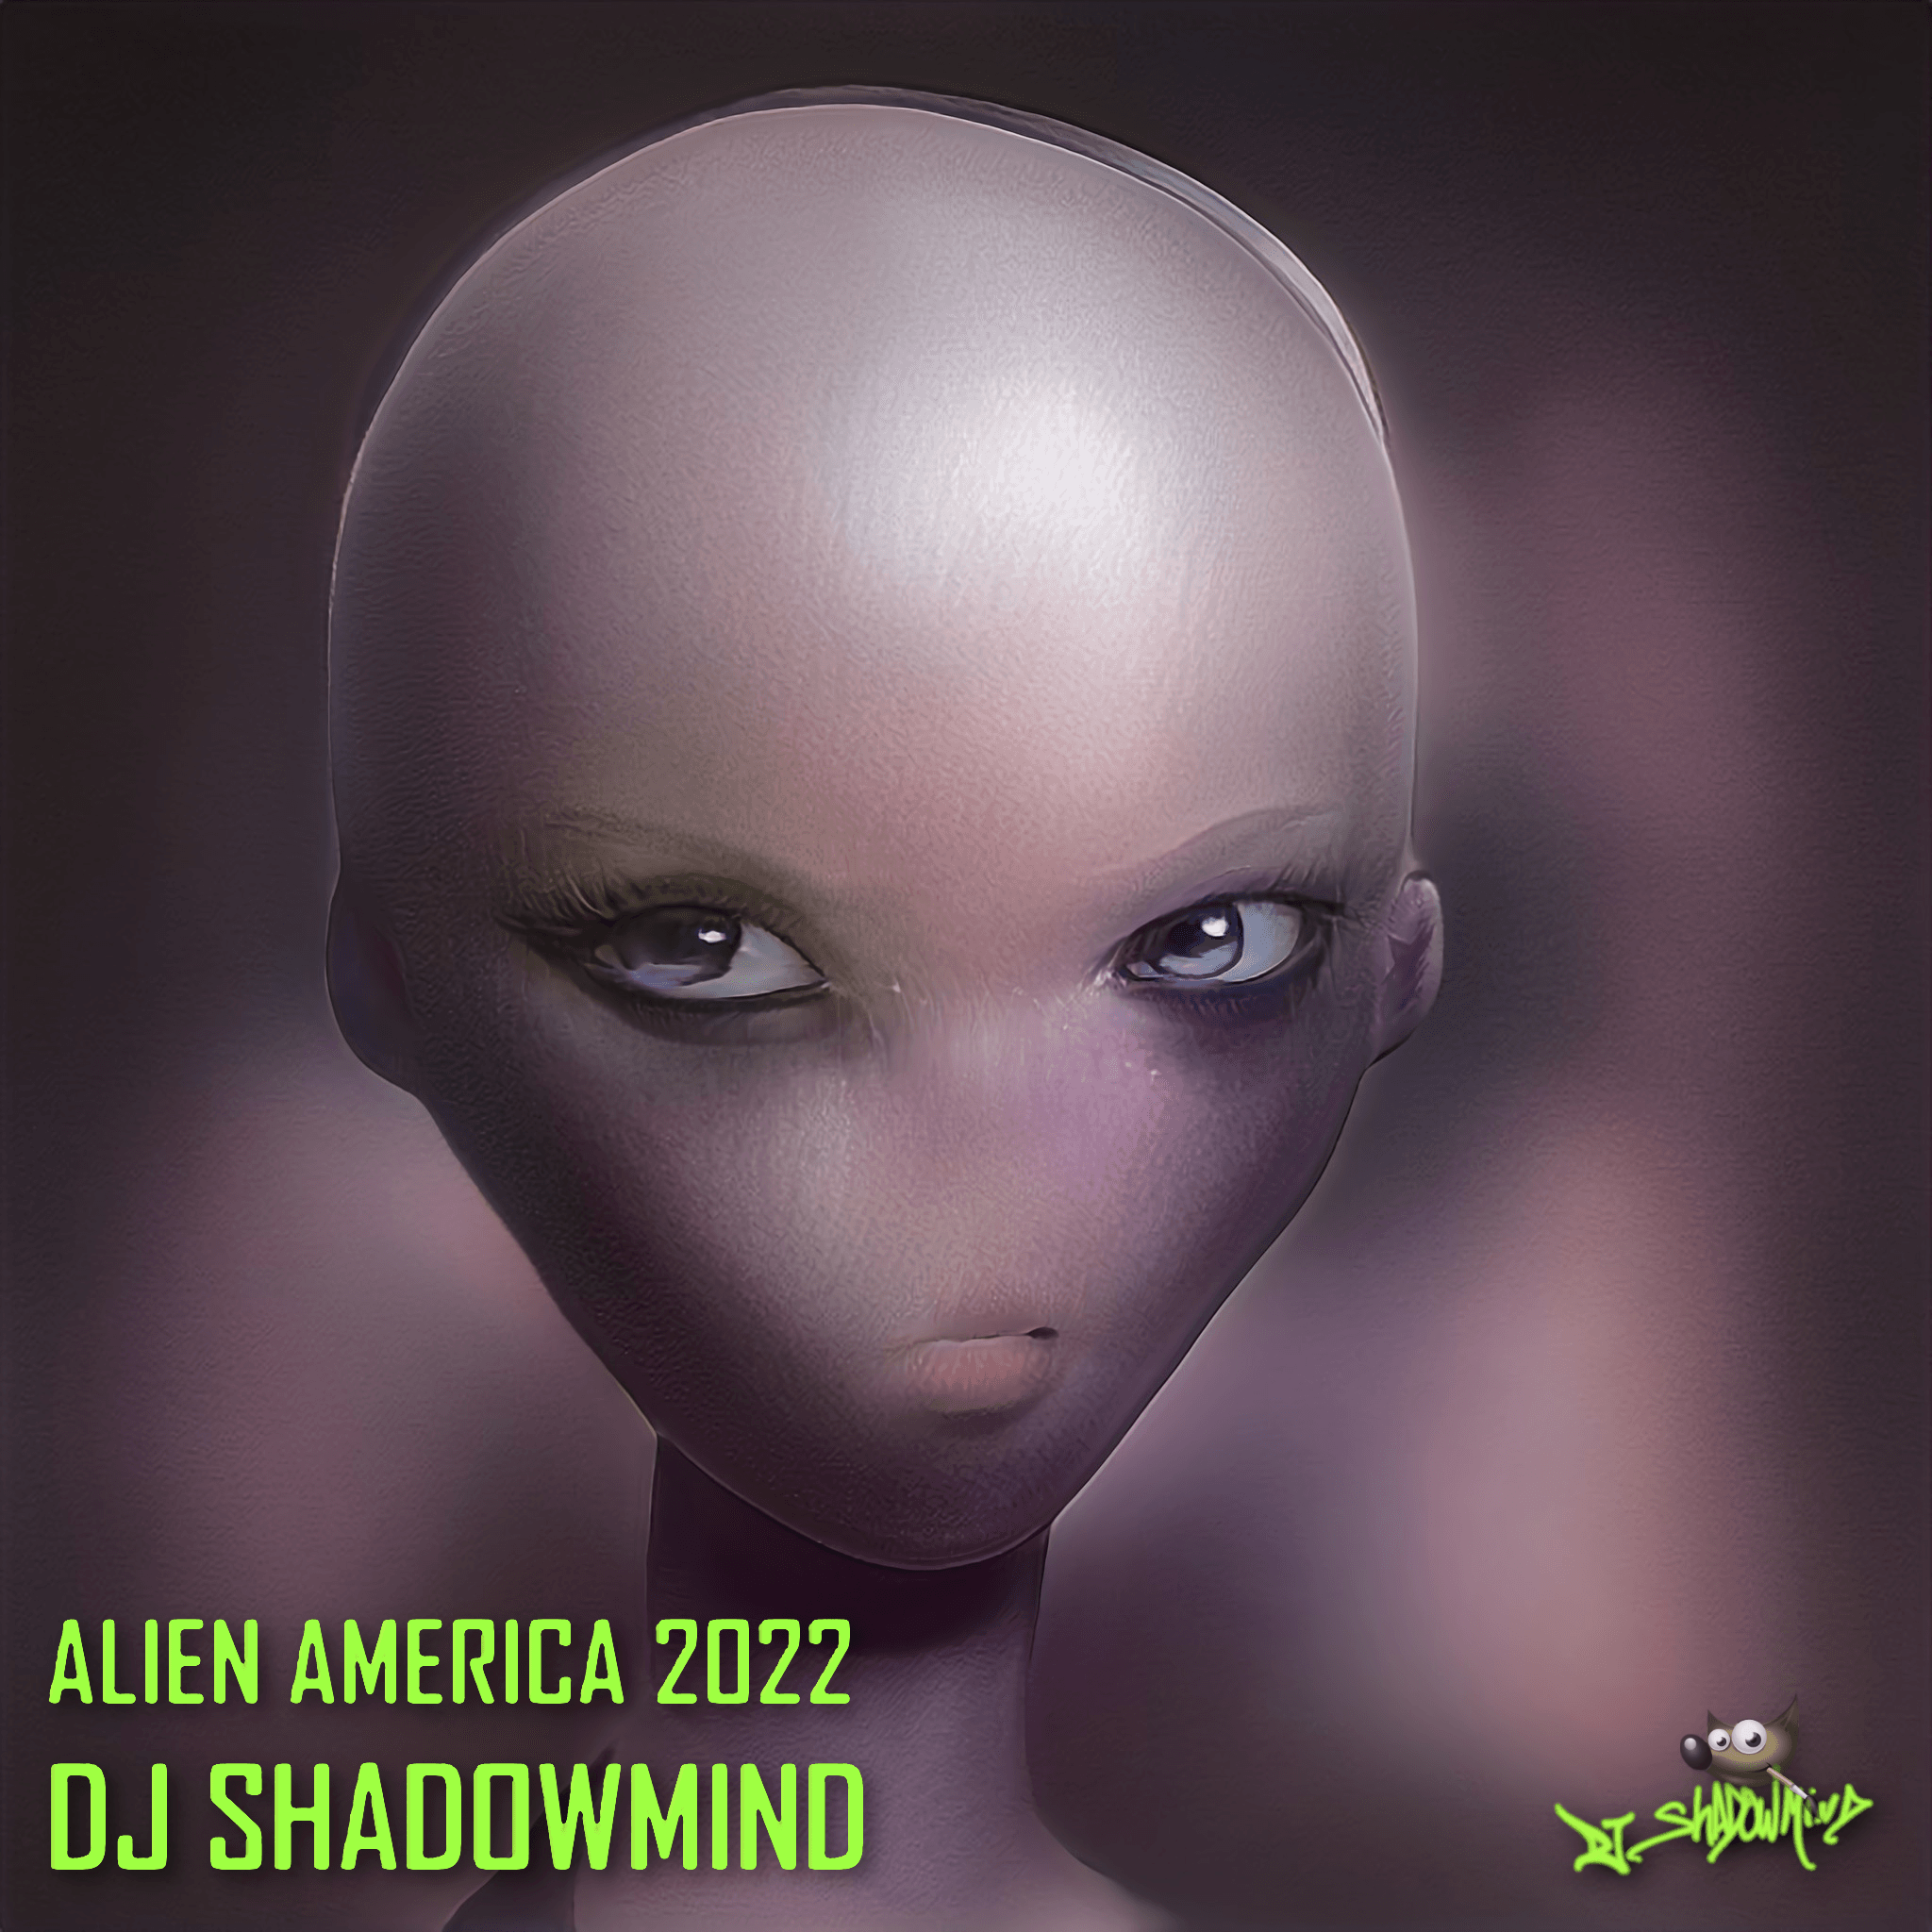 Alien America 2022 - Agent 131